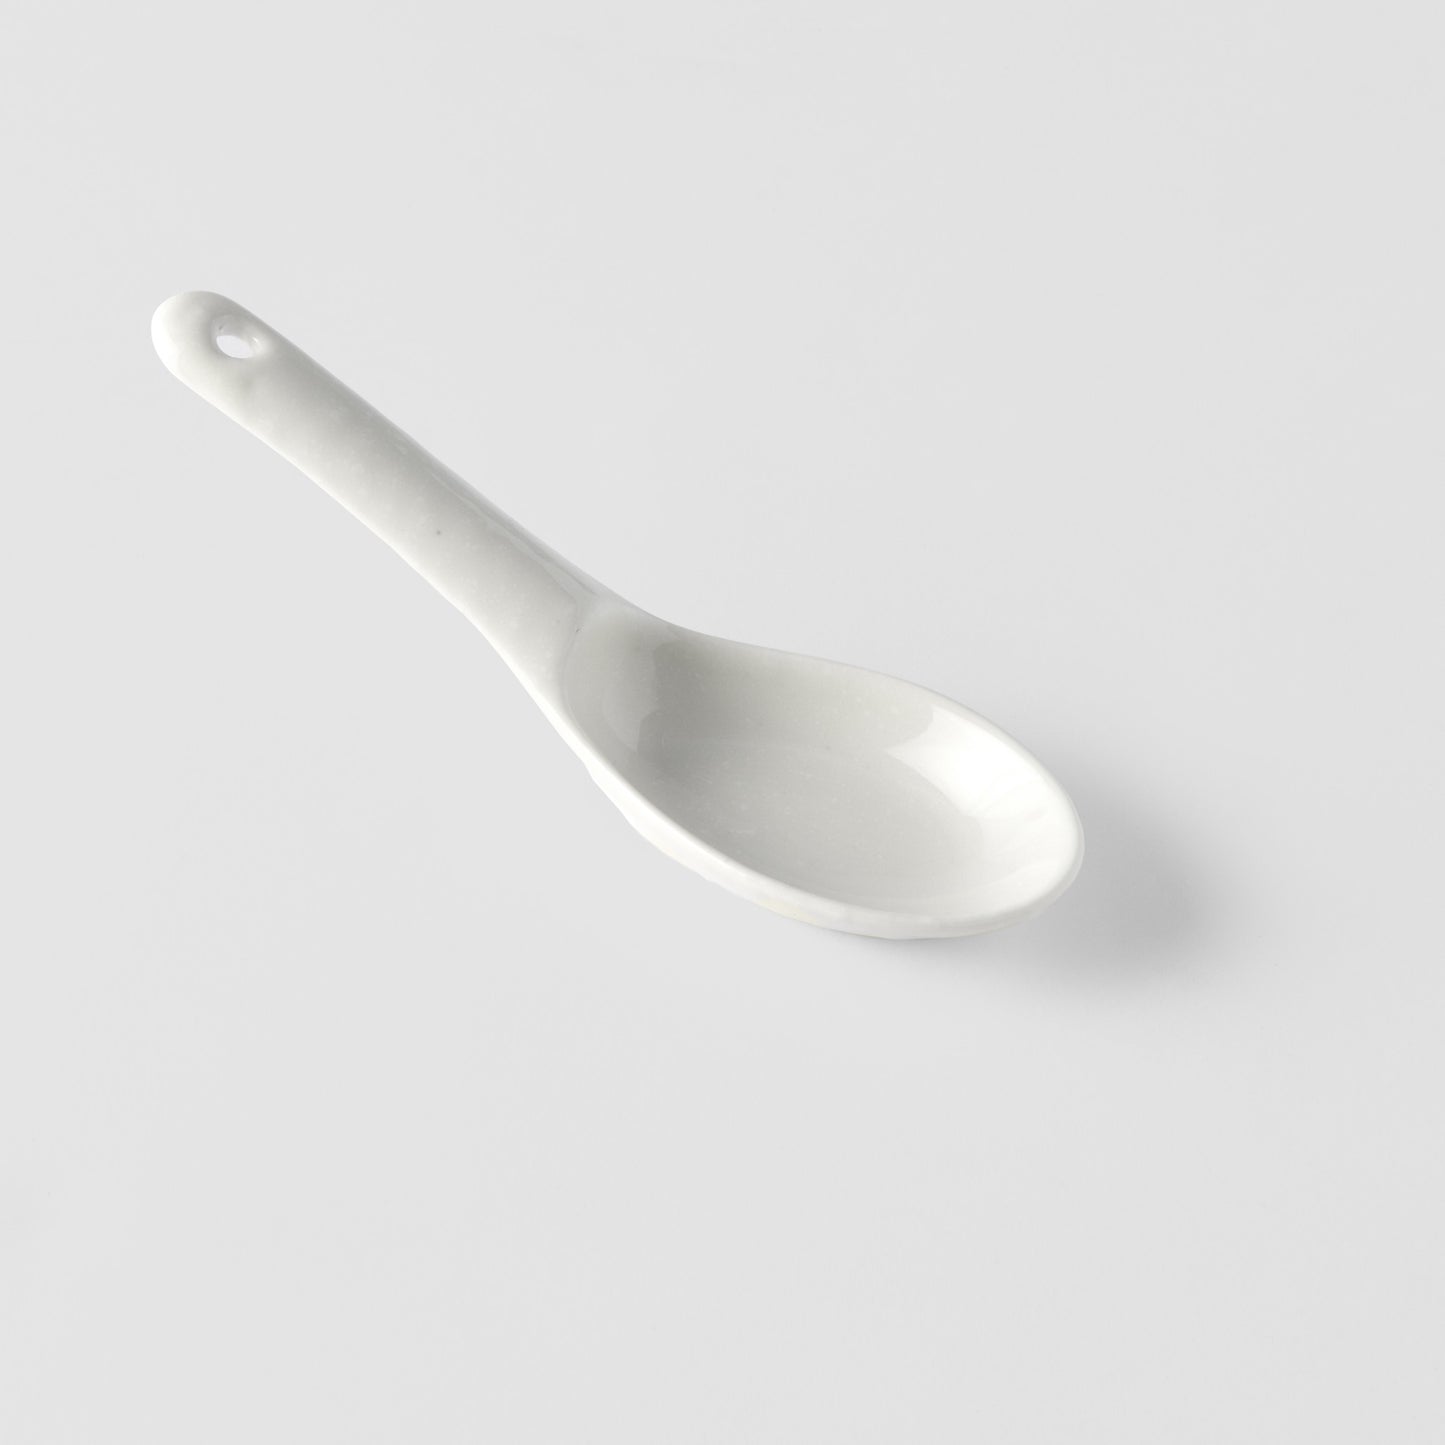 White small spoon 15cm